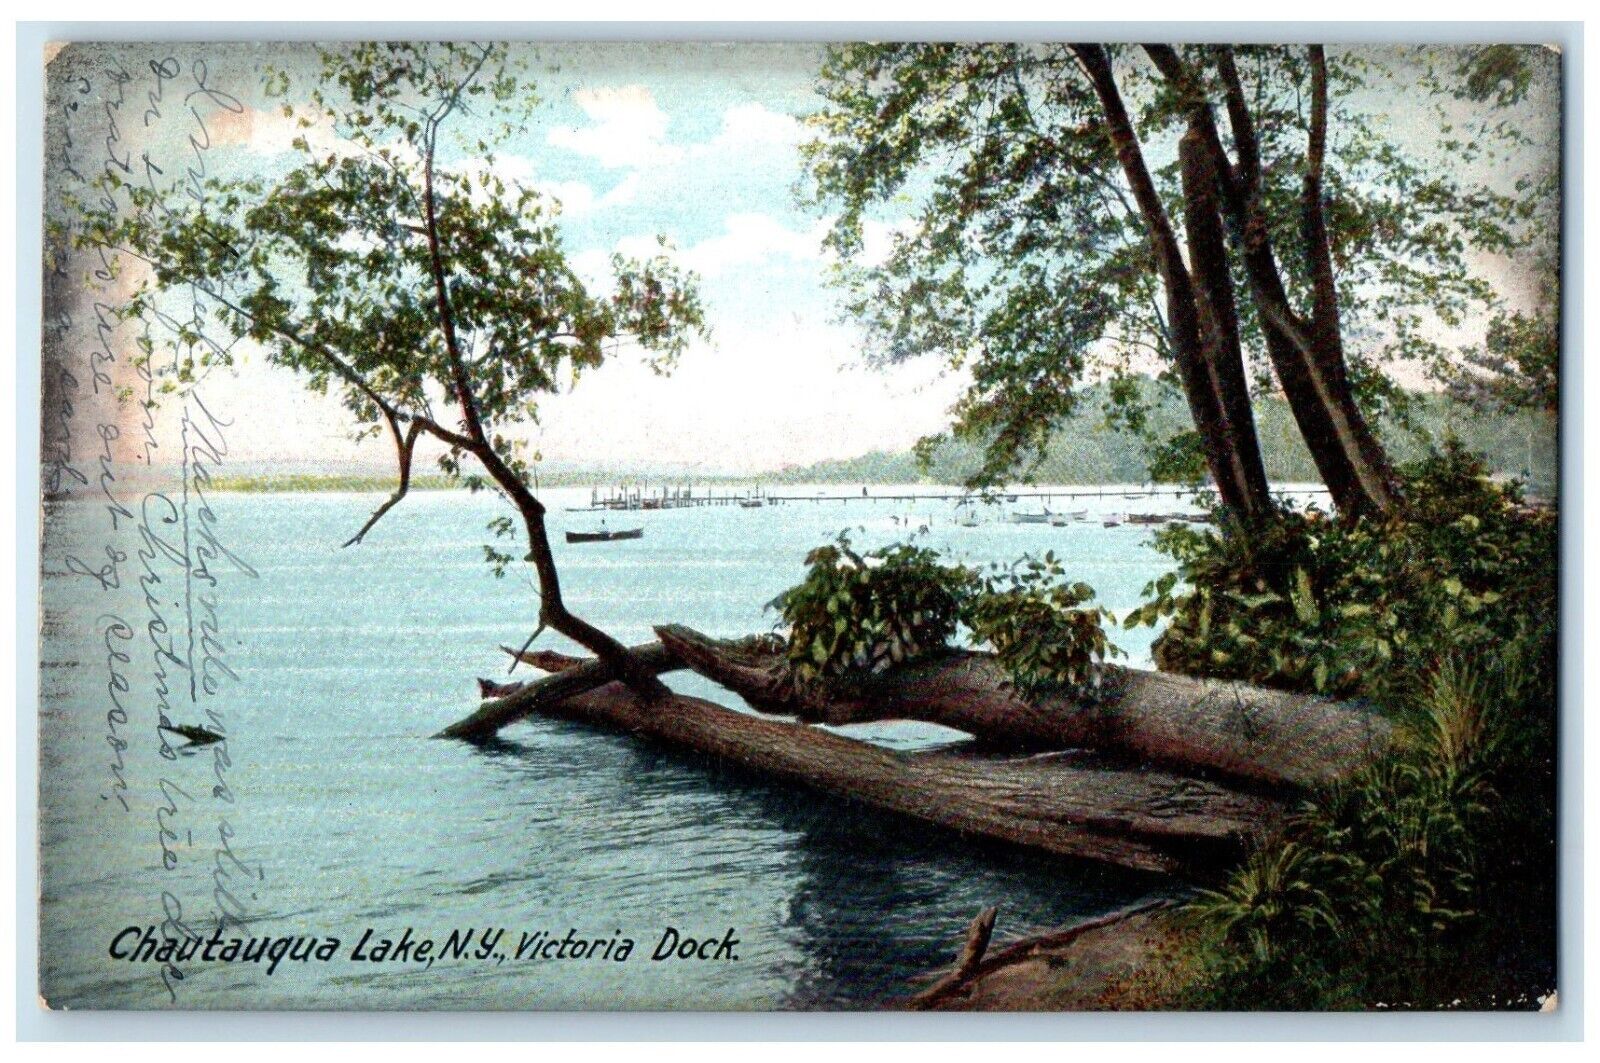 1906 Victoria Dock Log Swamp River Lake Boat Chautauqua Lake New York Postcard